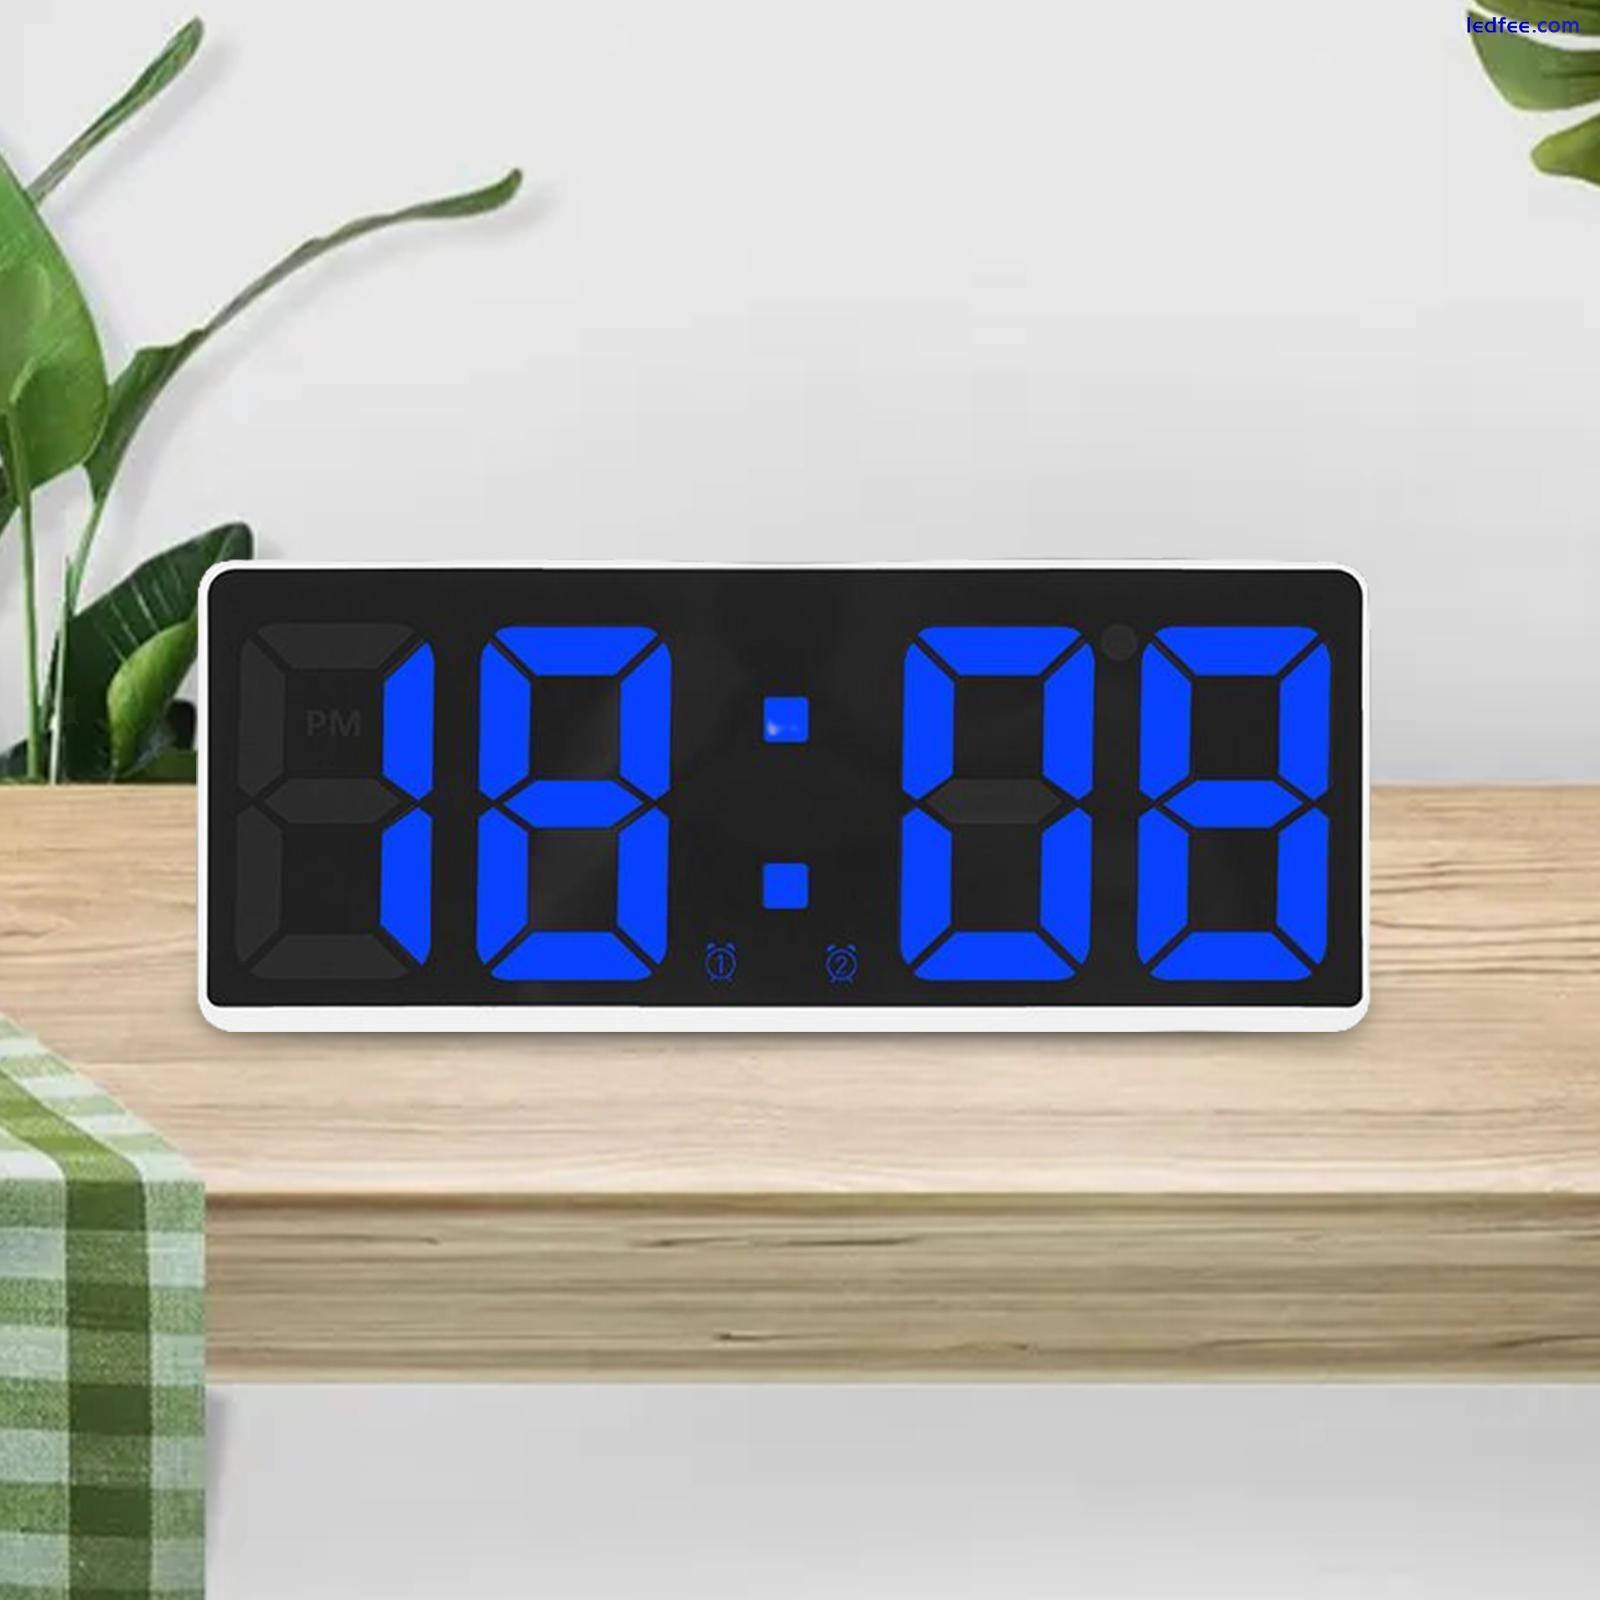 Large Number Alarm Clock Table Date LED Display for Elderly Home Living 4 